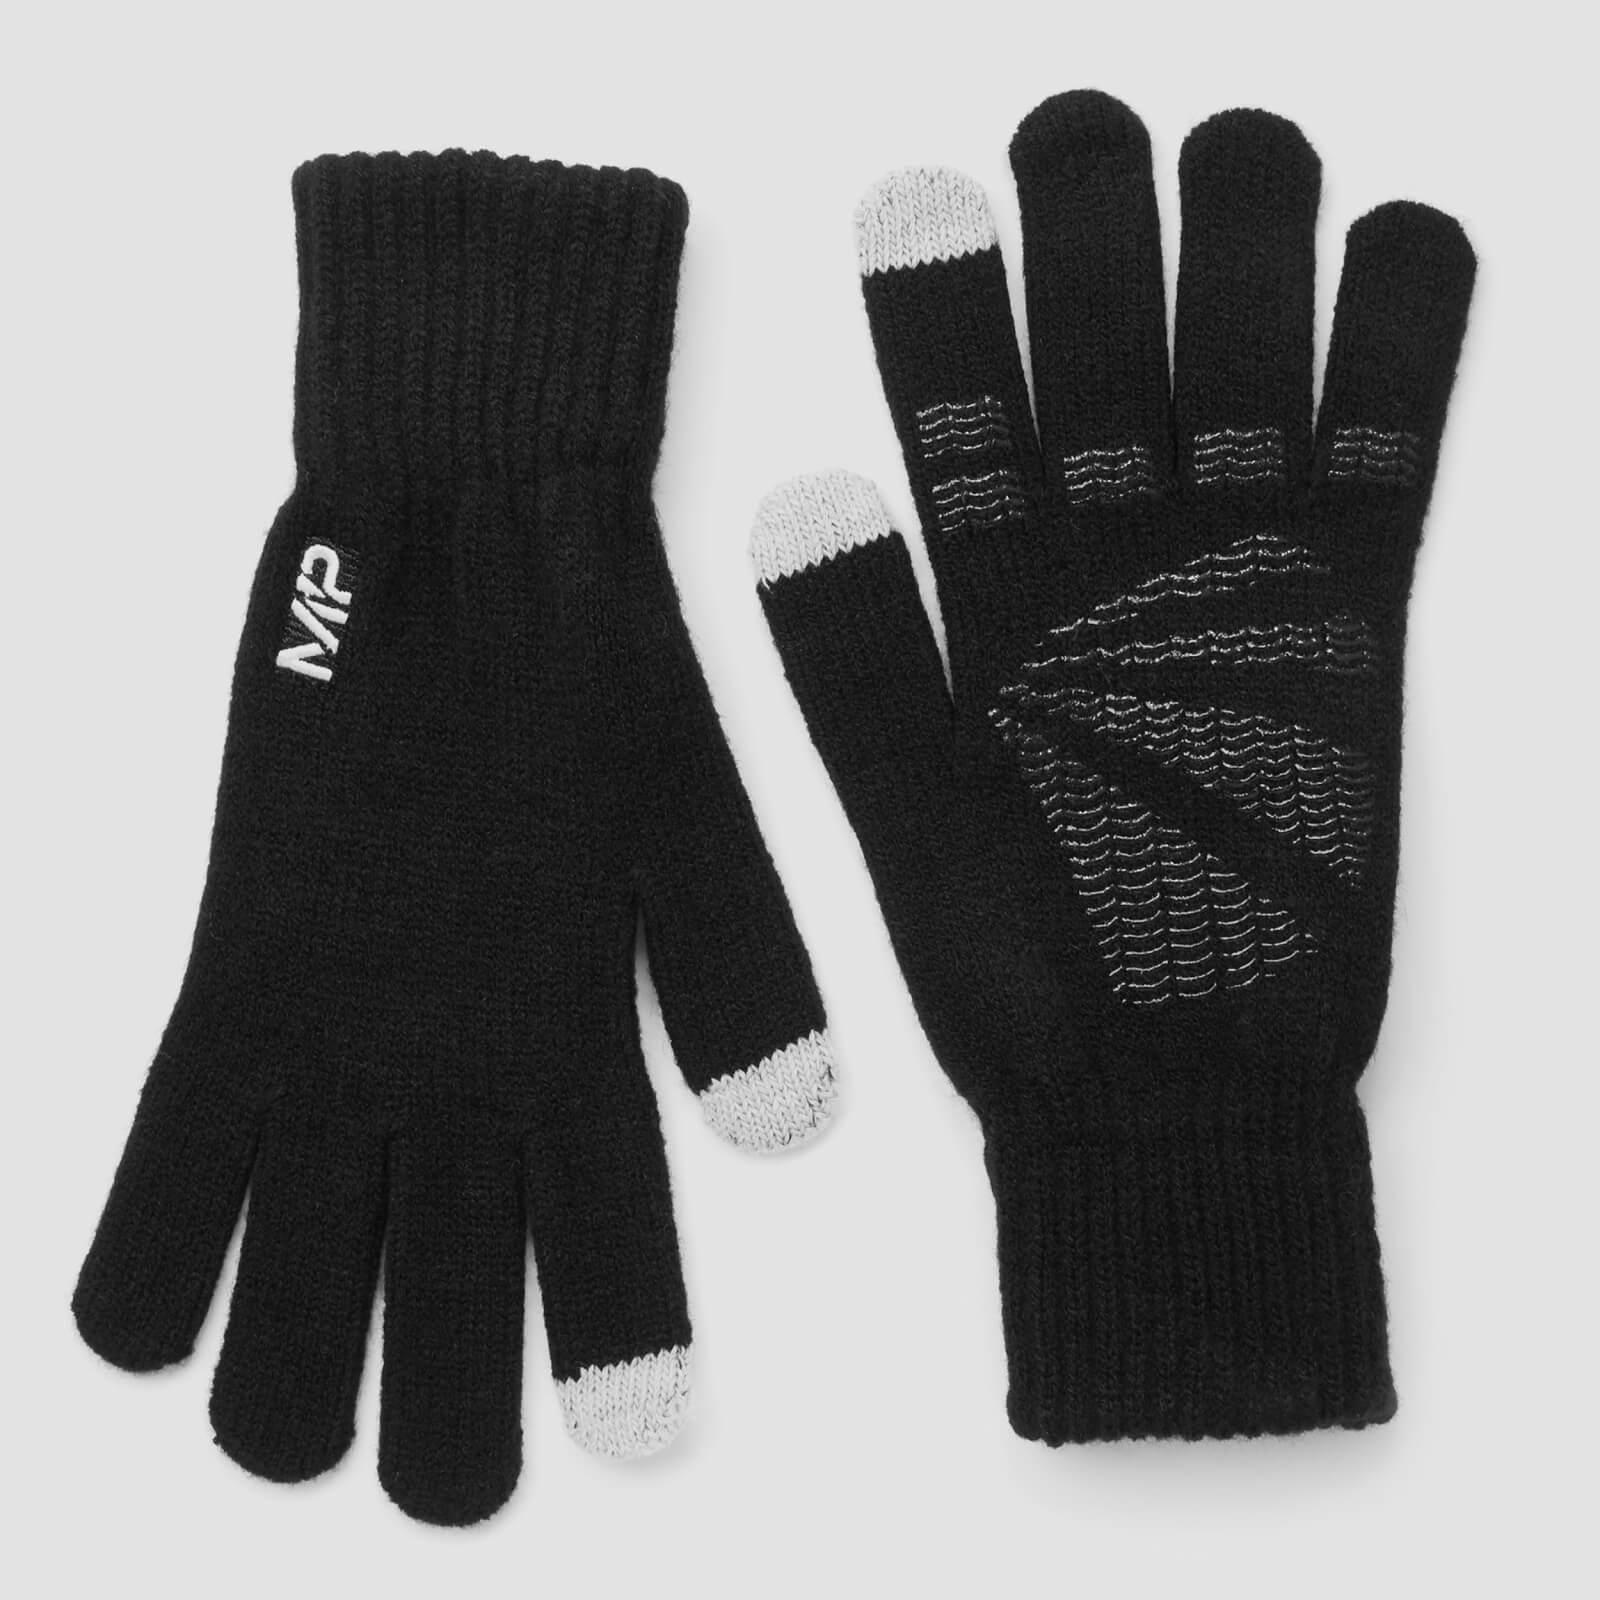 Knitted Gloves - Black - S/M